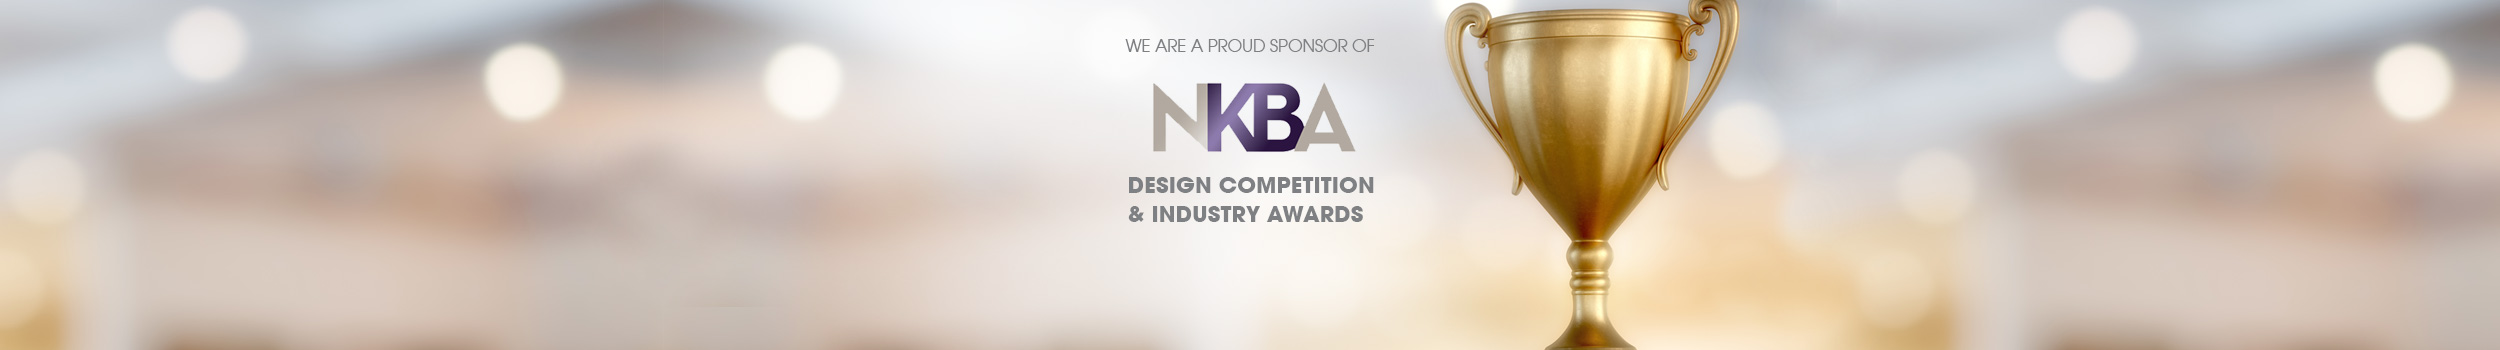 Proud Sponsor of NKBA - 2020 KBIS